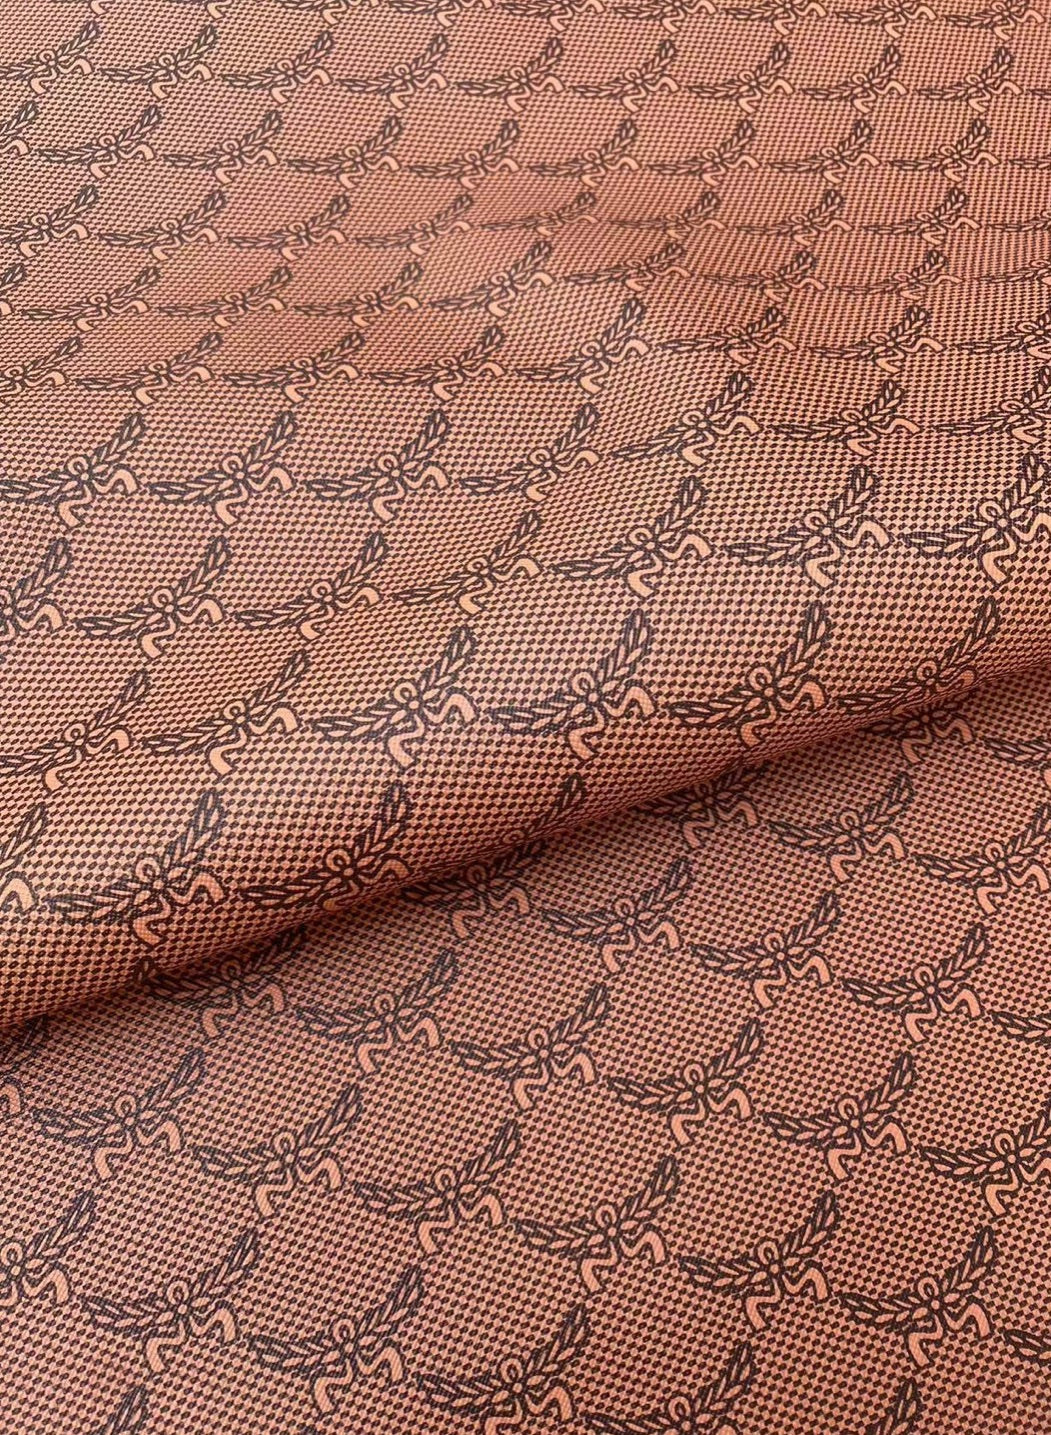 Handmade Brown Mcm Vinyl Leather for Custom Sneakers Upholstery